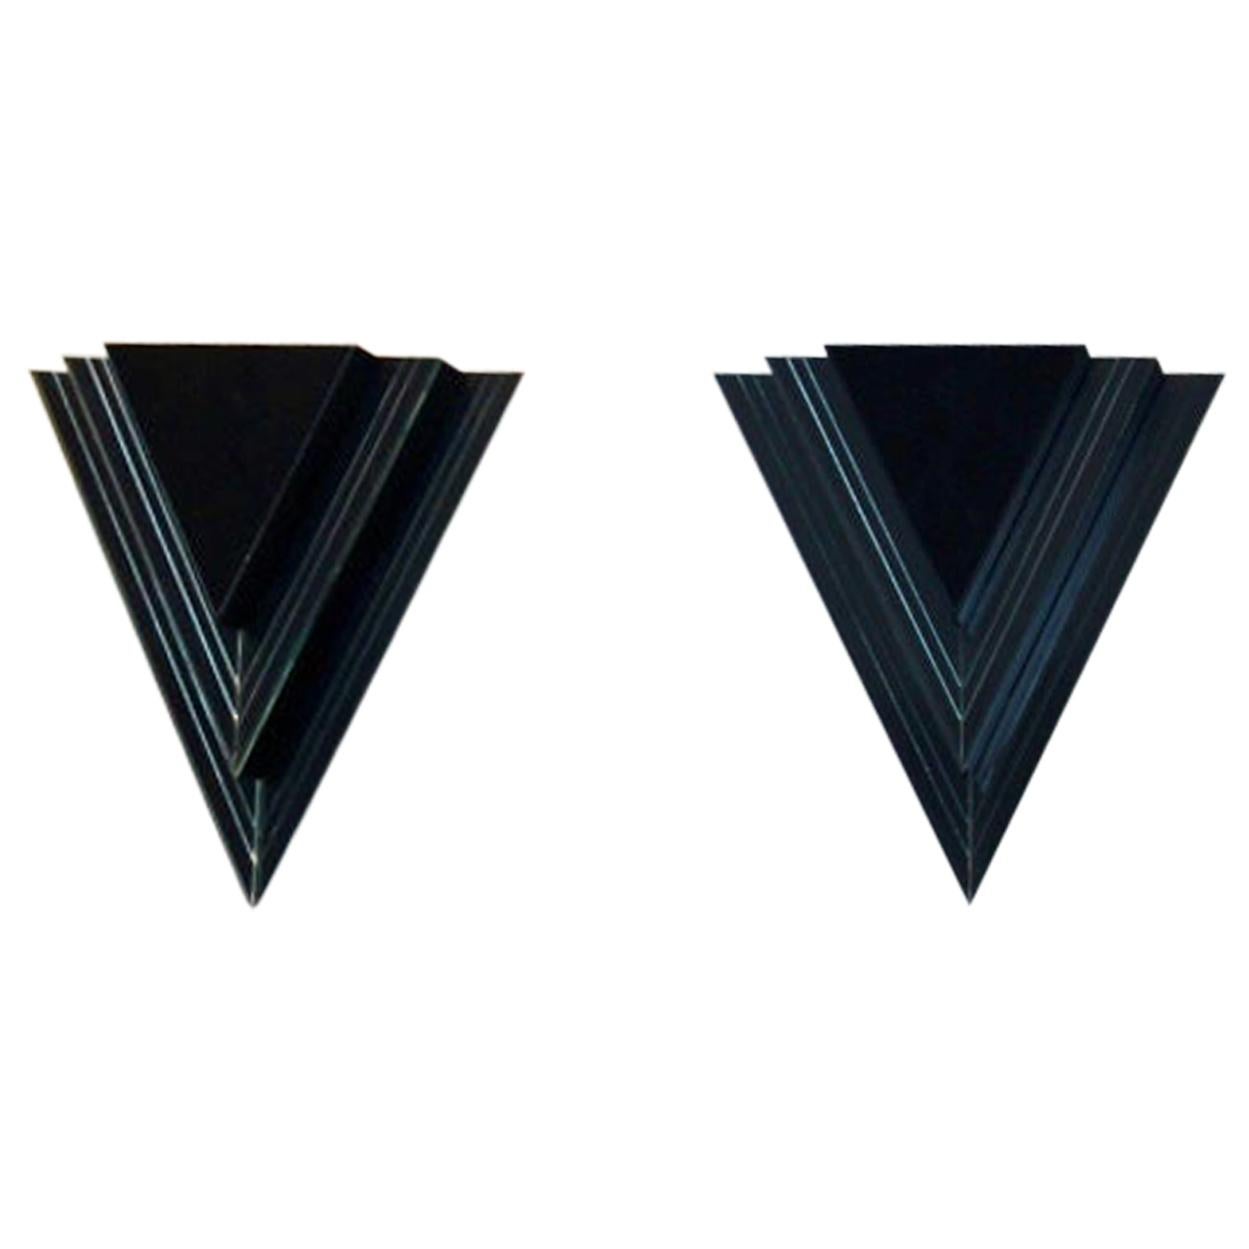 Dutch Modern Glass and Steel Triangular Wall Sconces